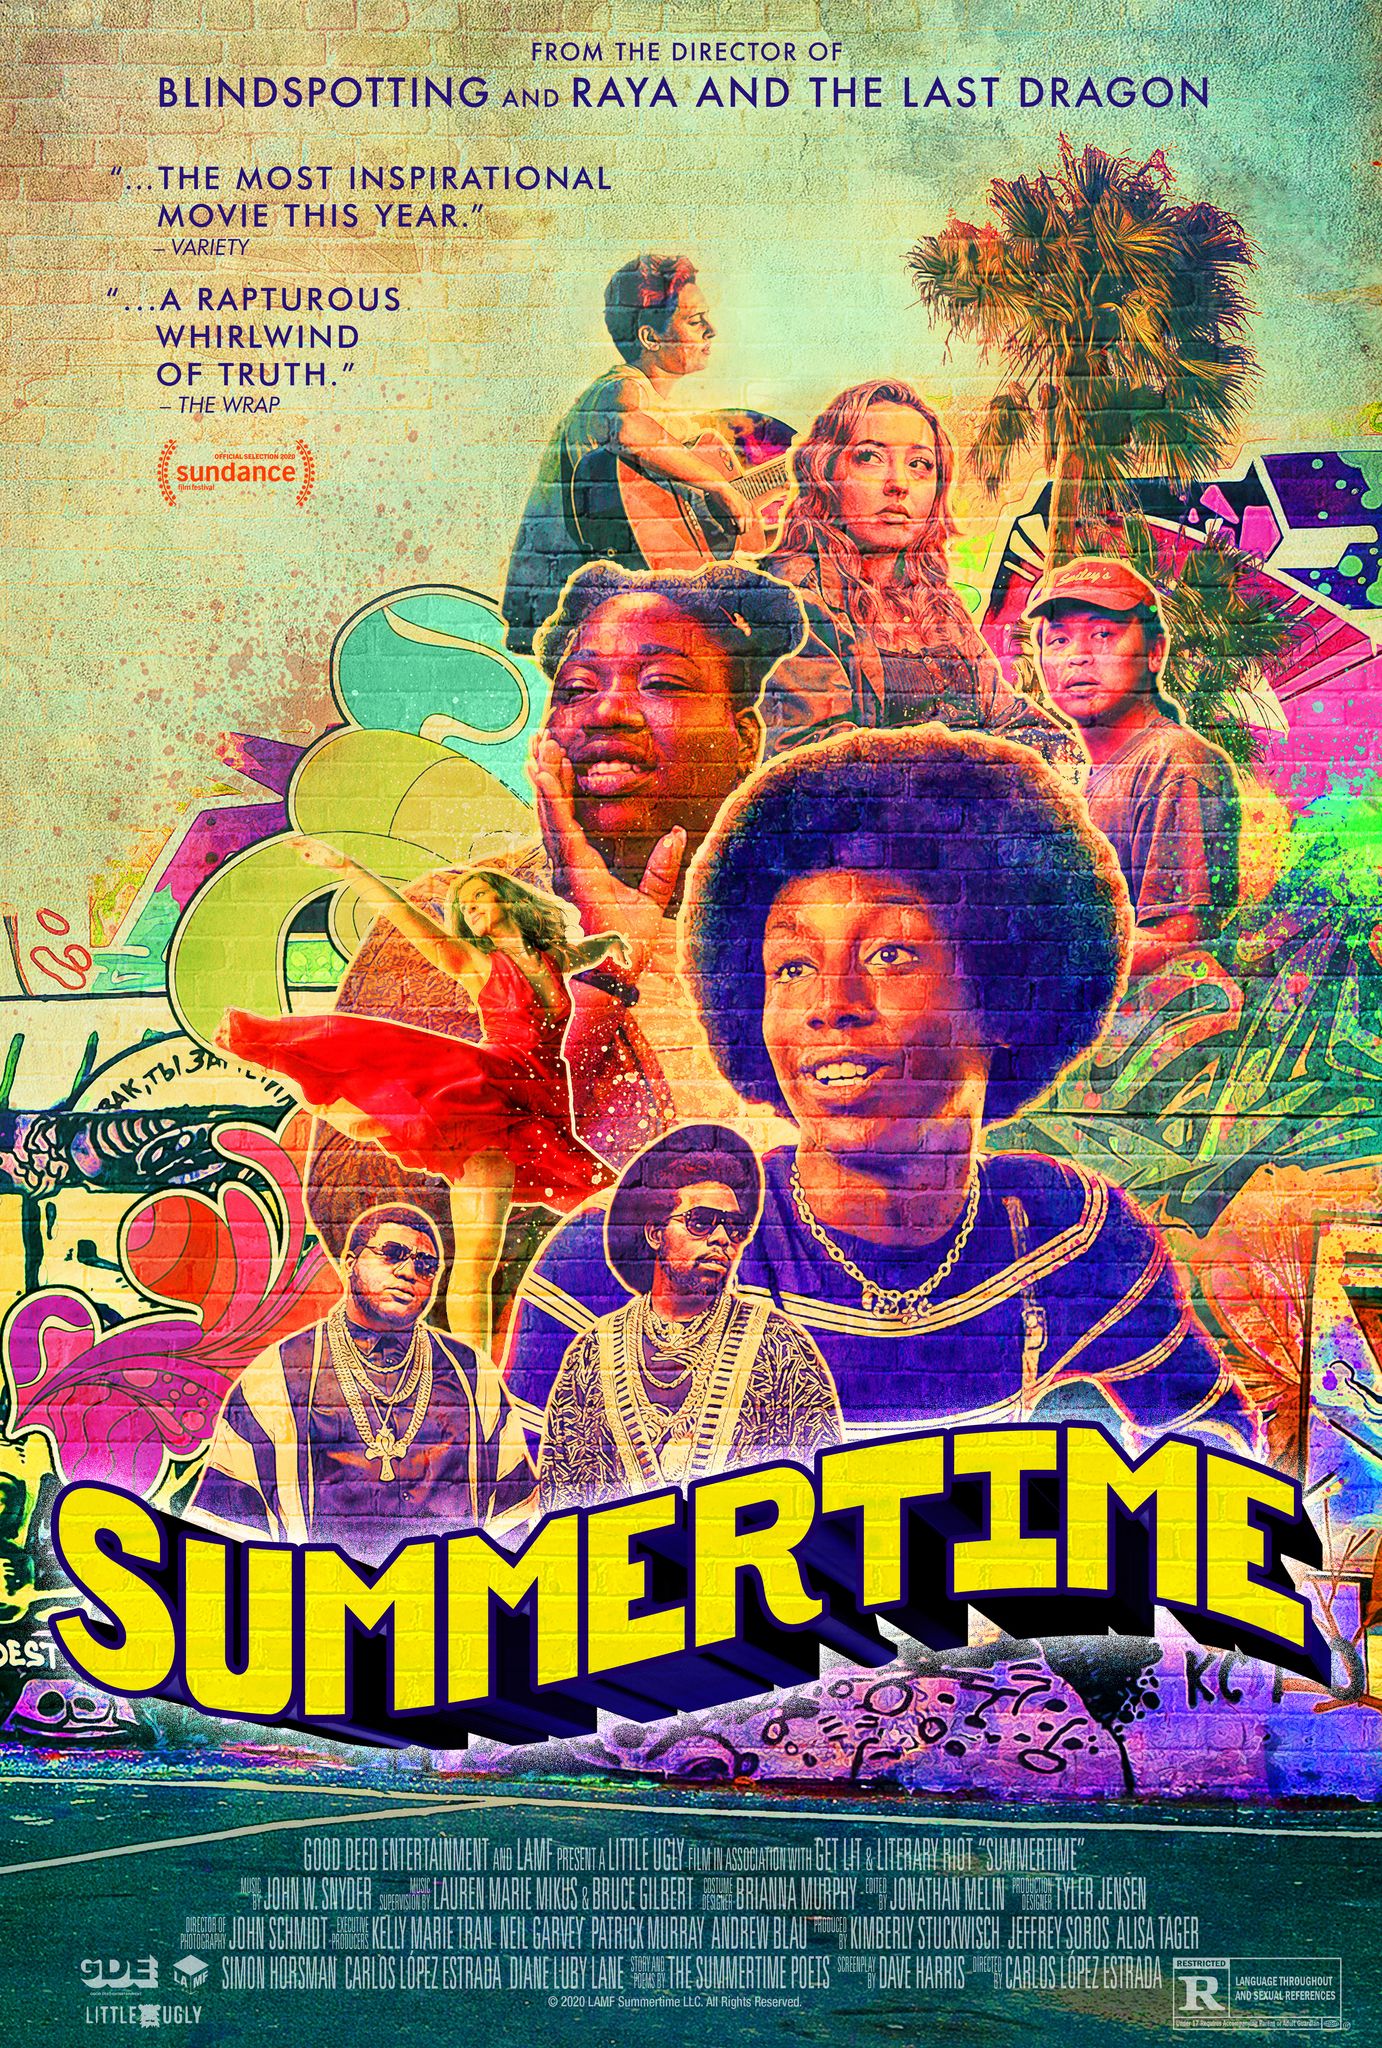 Film Review: “Summertime”